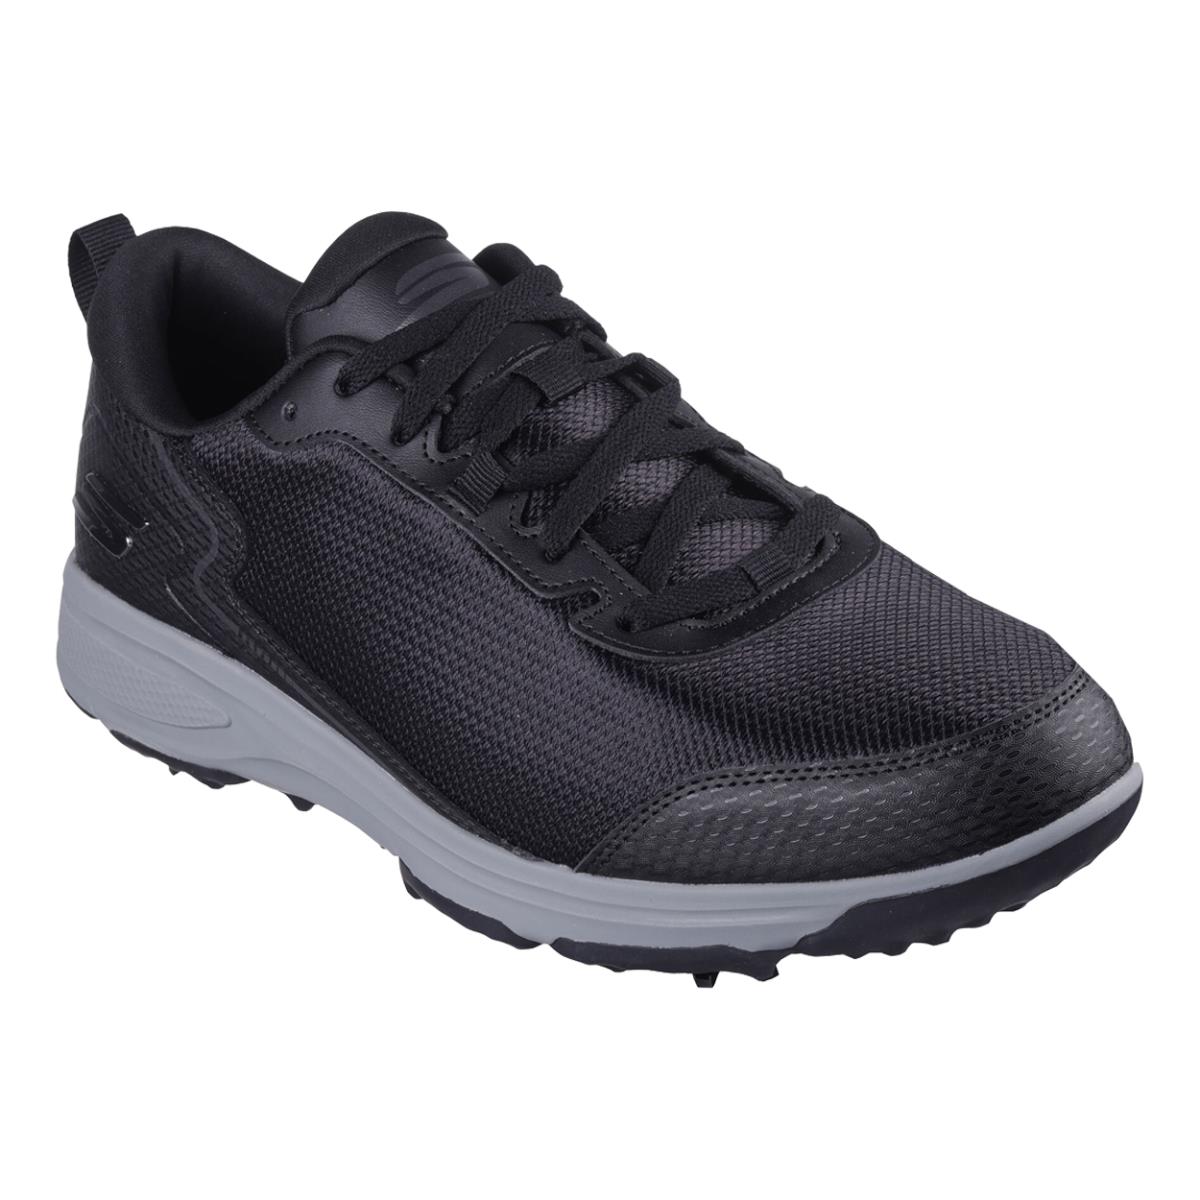 Skechers Men`s Torque Sport Fairway Relaxed Fit Soft Spike Golf Shoe Black/White